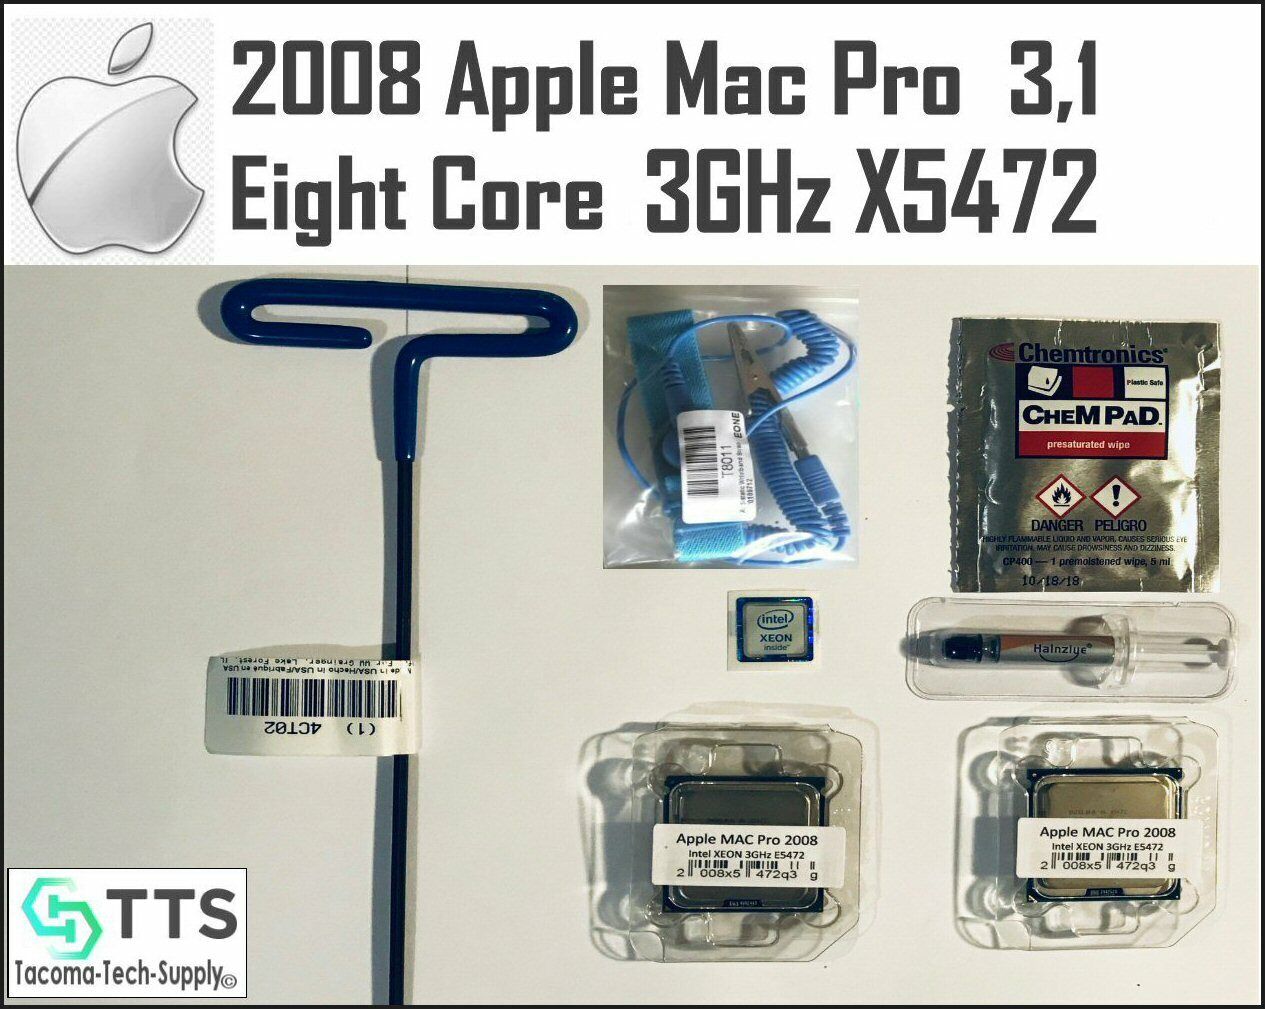 Eight Core 2008 Apple Mac Pro 3,1 X5472,X5482 3-3.2GHz SLANZ CPU Processor kit